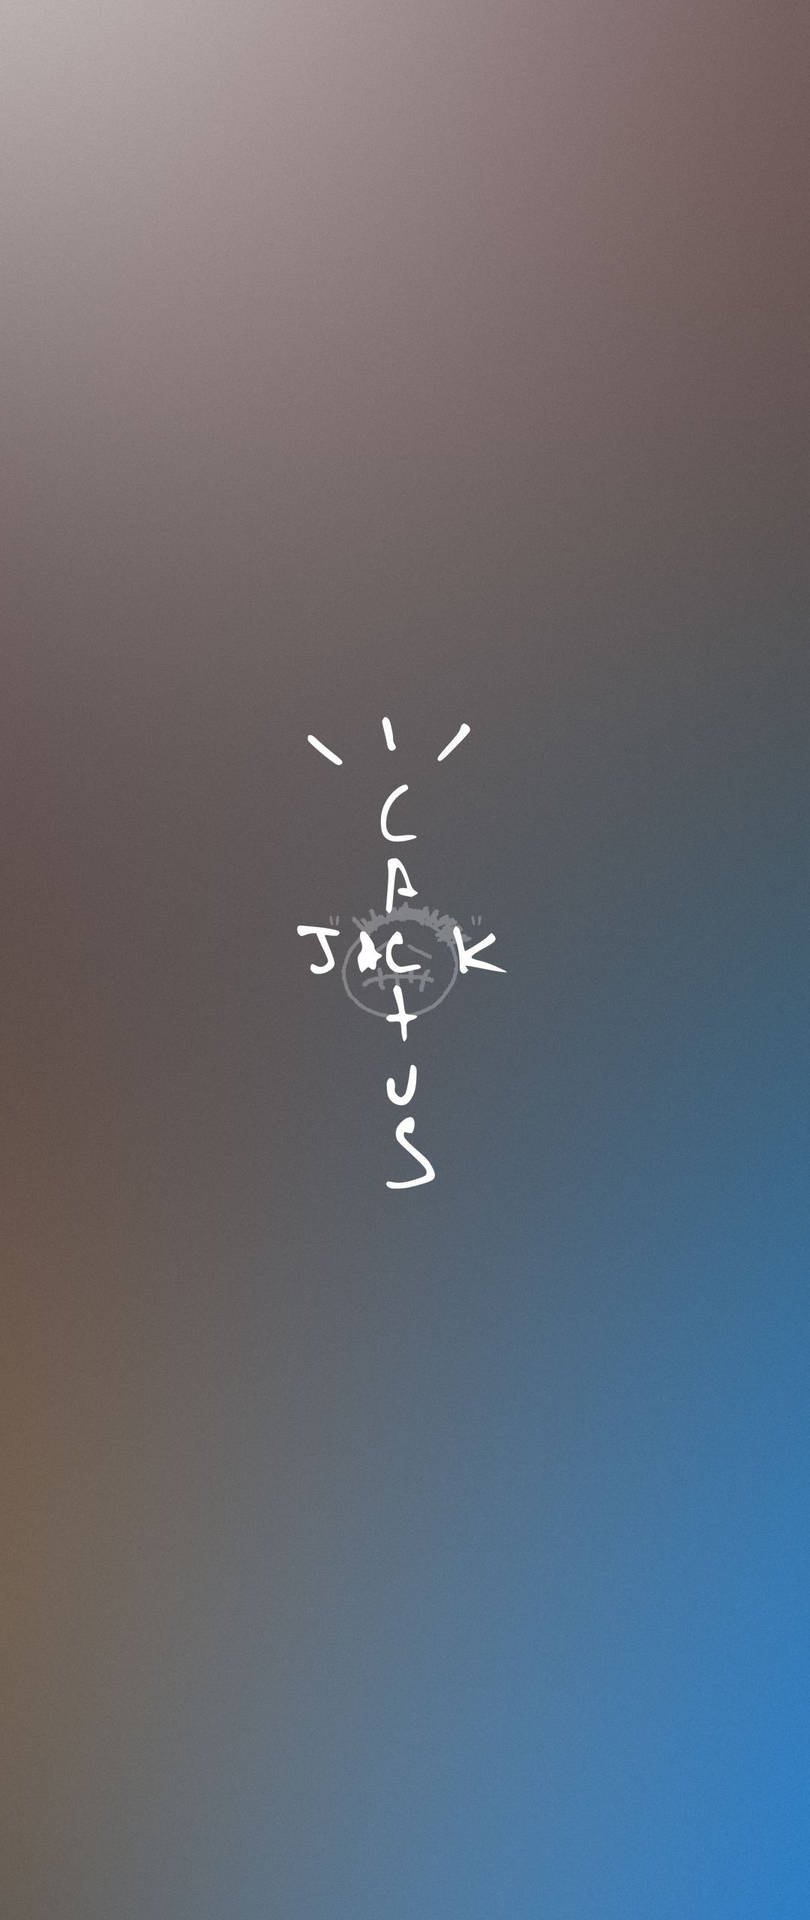 Cactus Jack Travis Scott Text Logo Blue And Gray Wallpaper